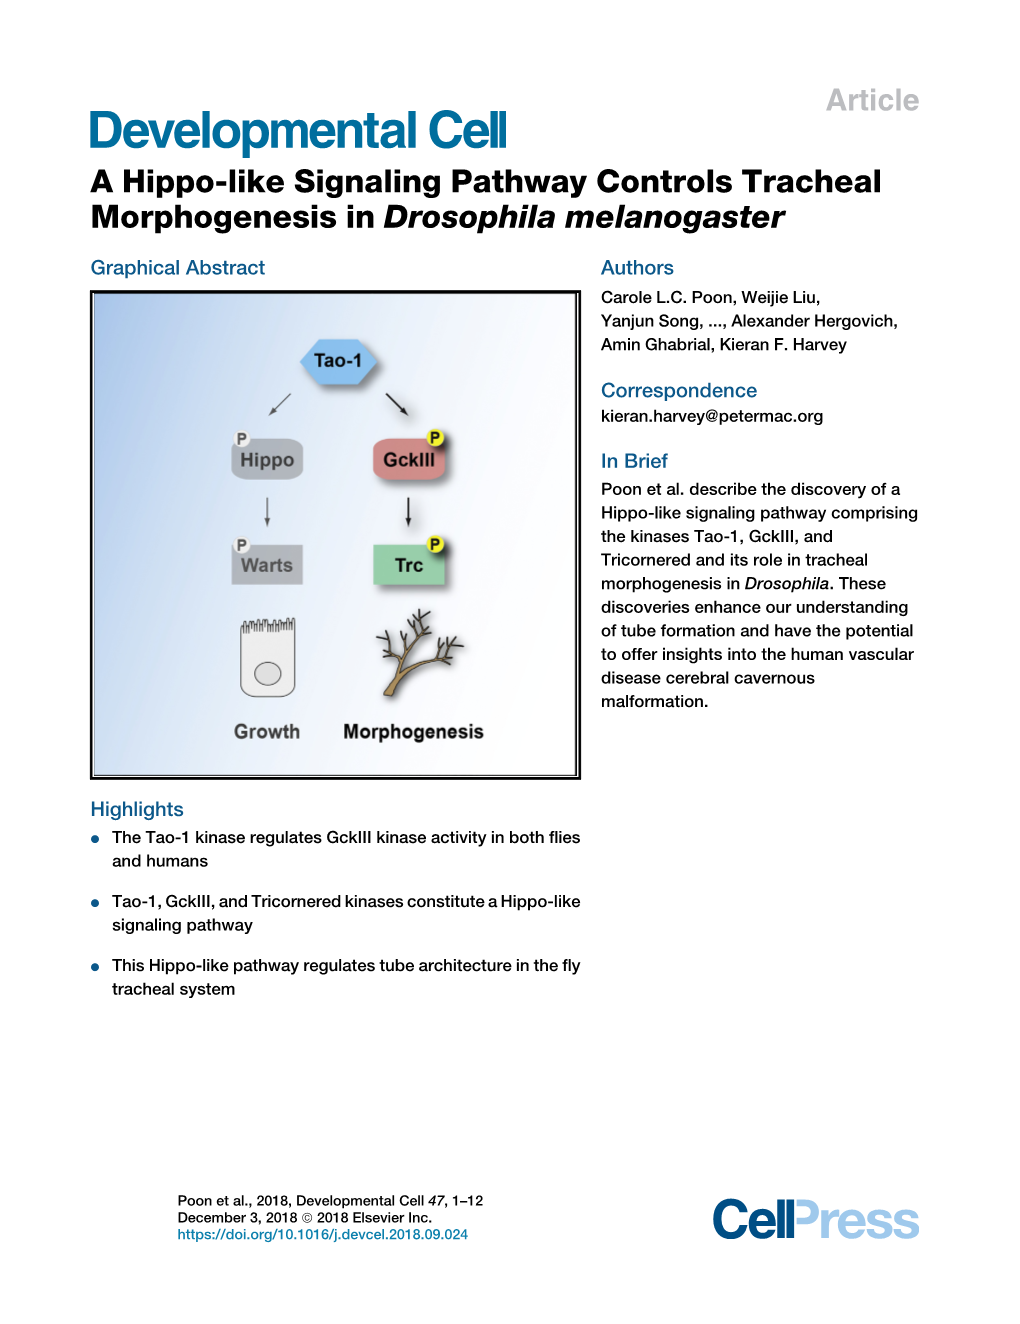 A Hippo-Like Signaling Pathway Controls Tracheal Morphogenesis in Drosophila Melanogaster